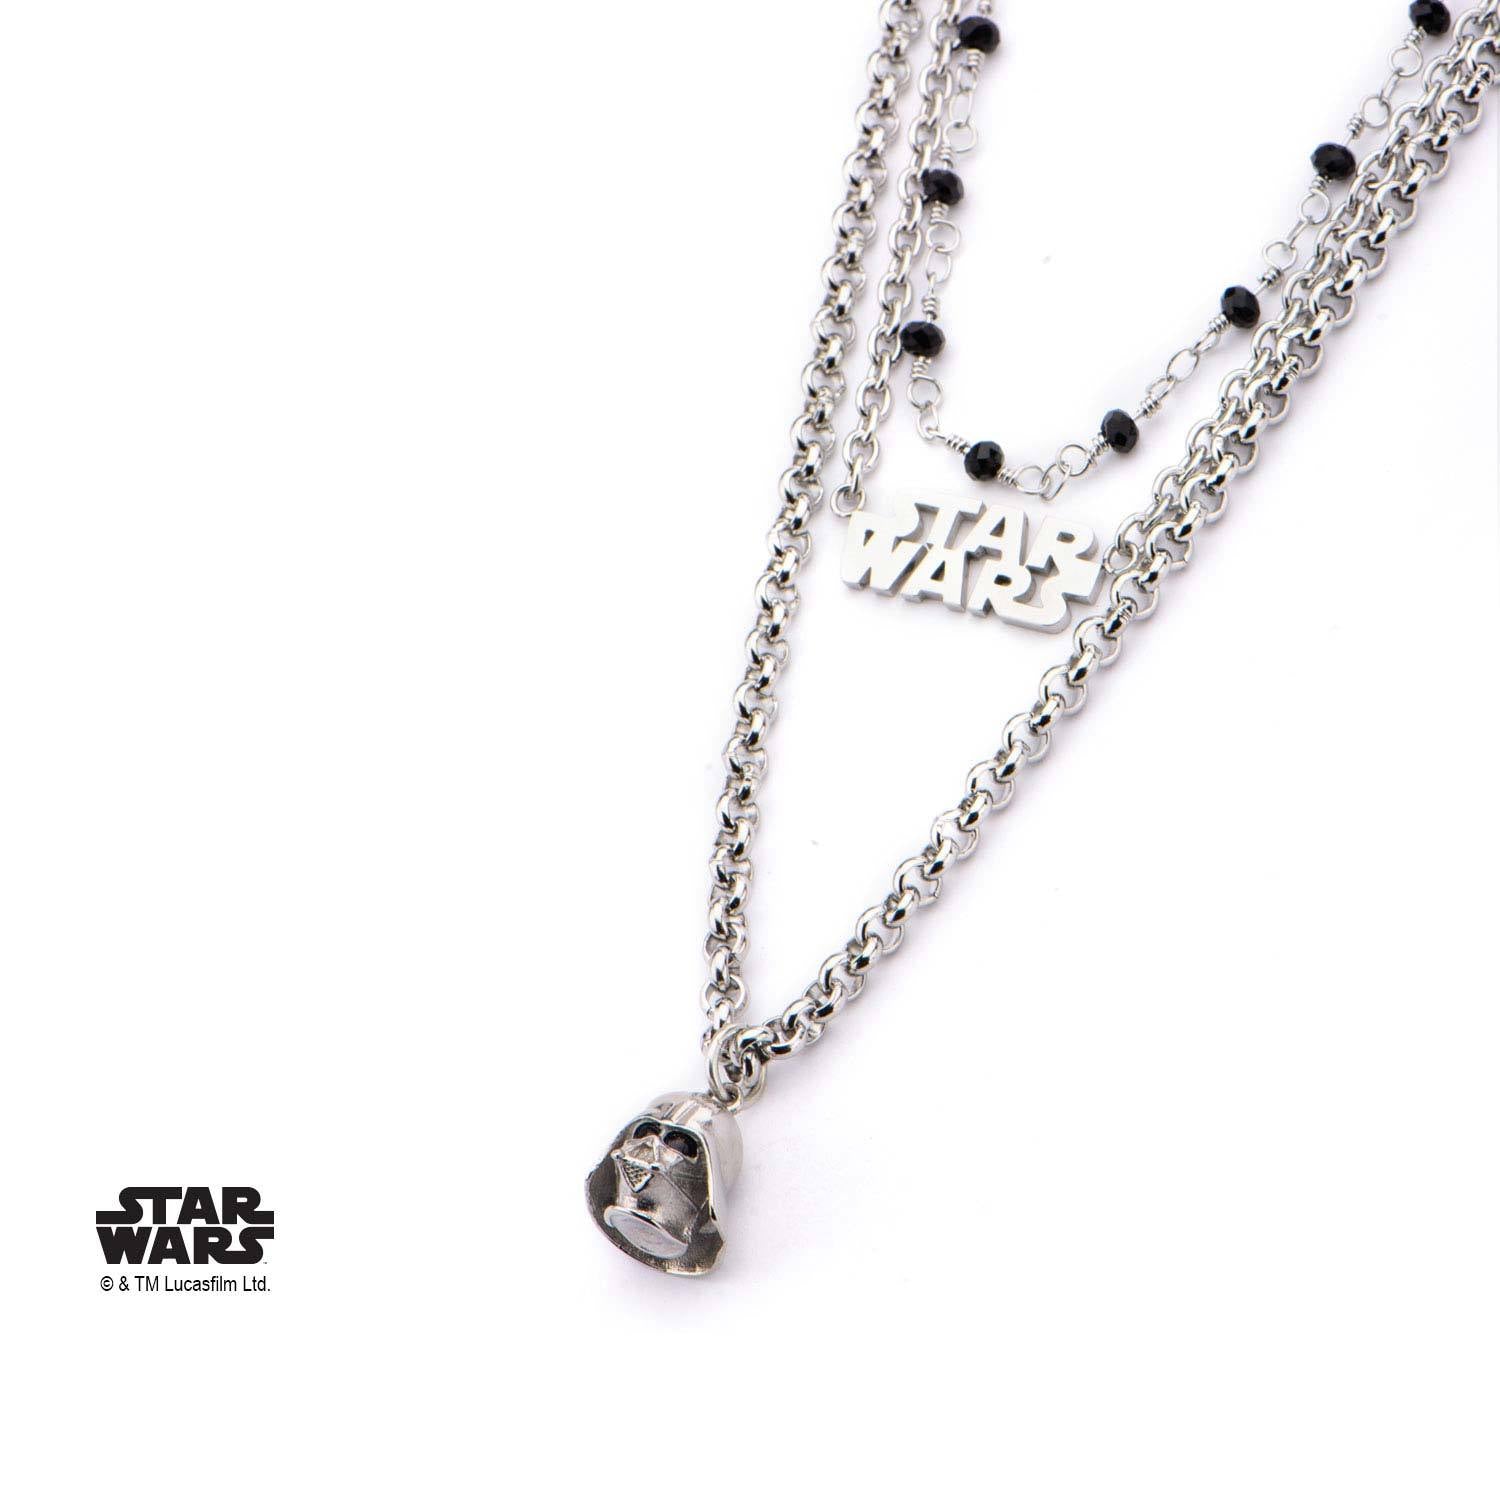 Star Wars Darth Vader Tiered Necklace